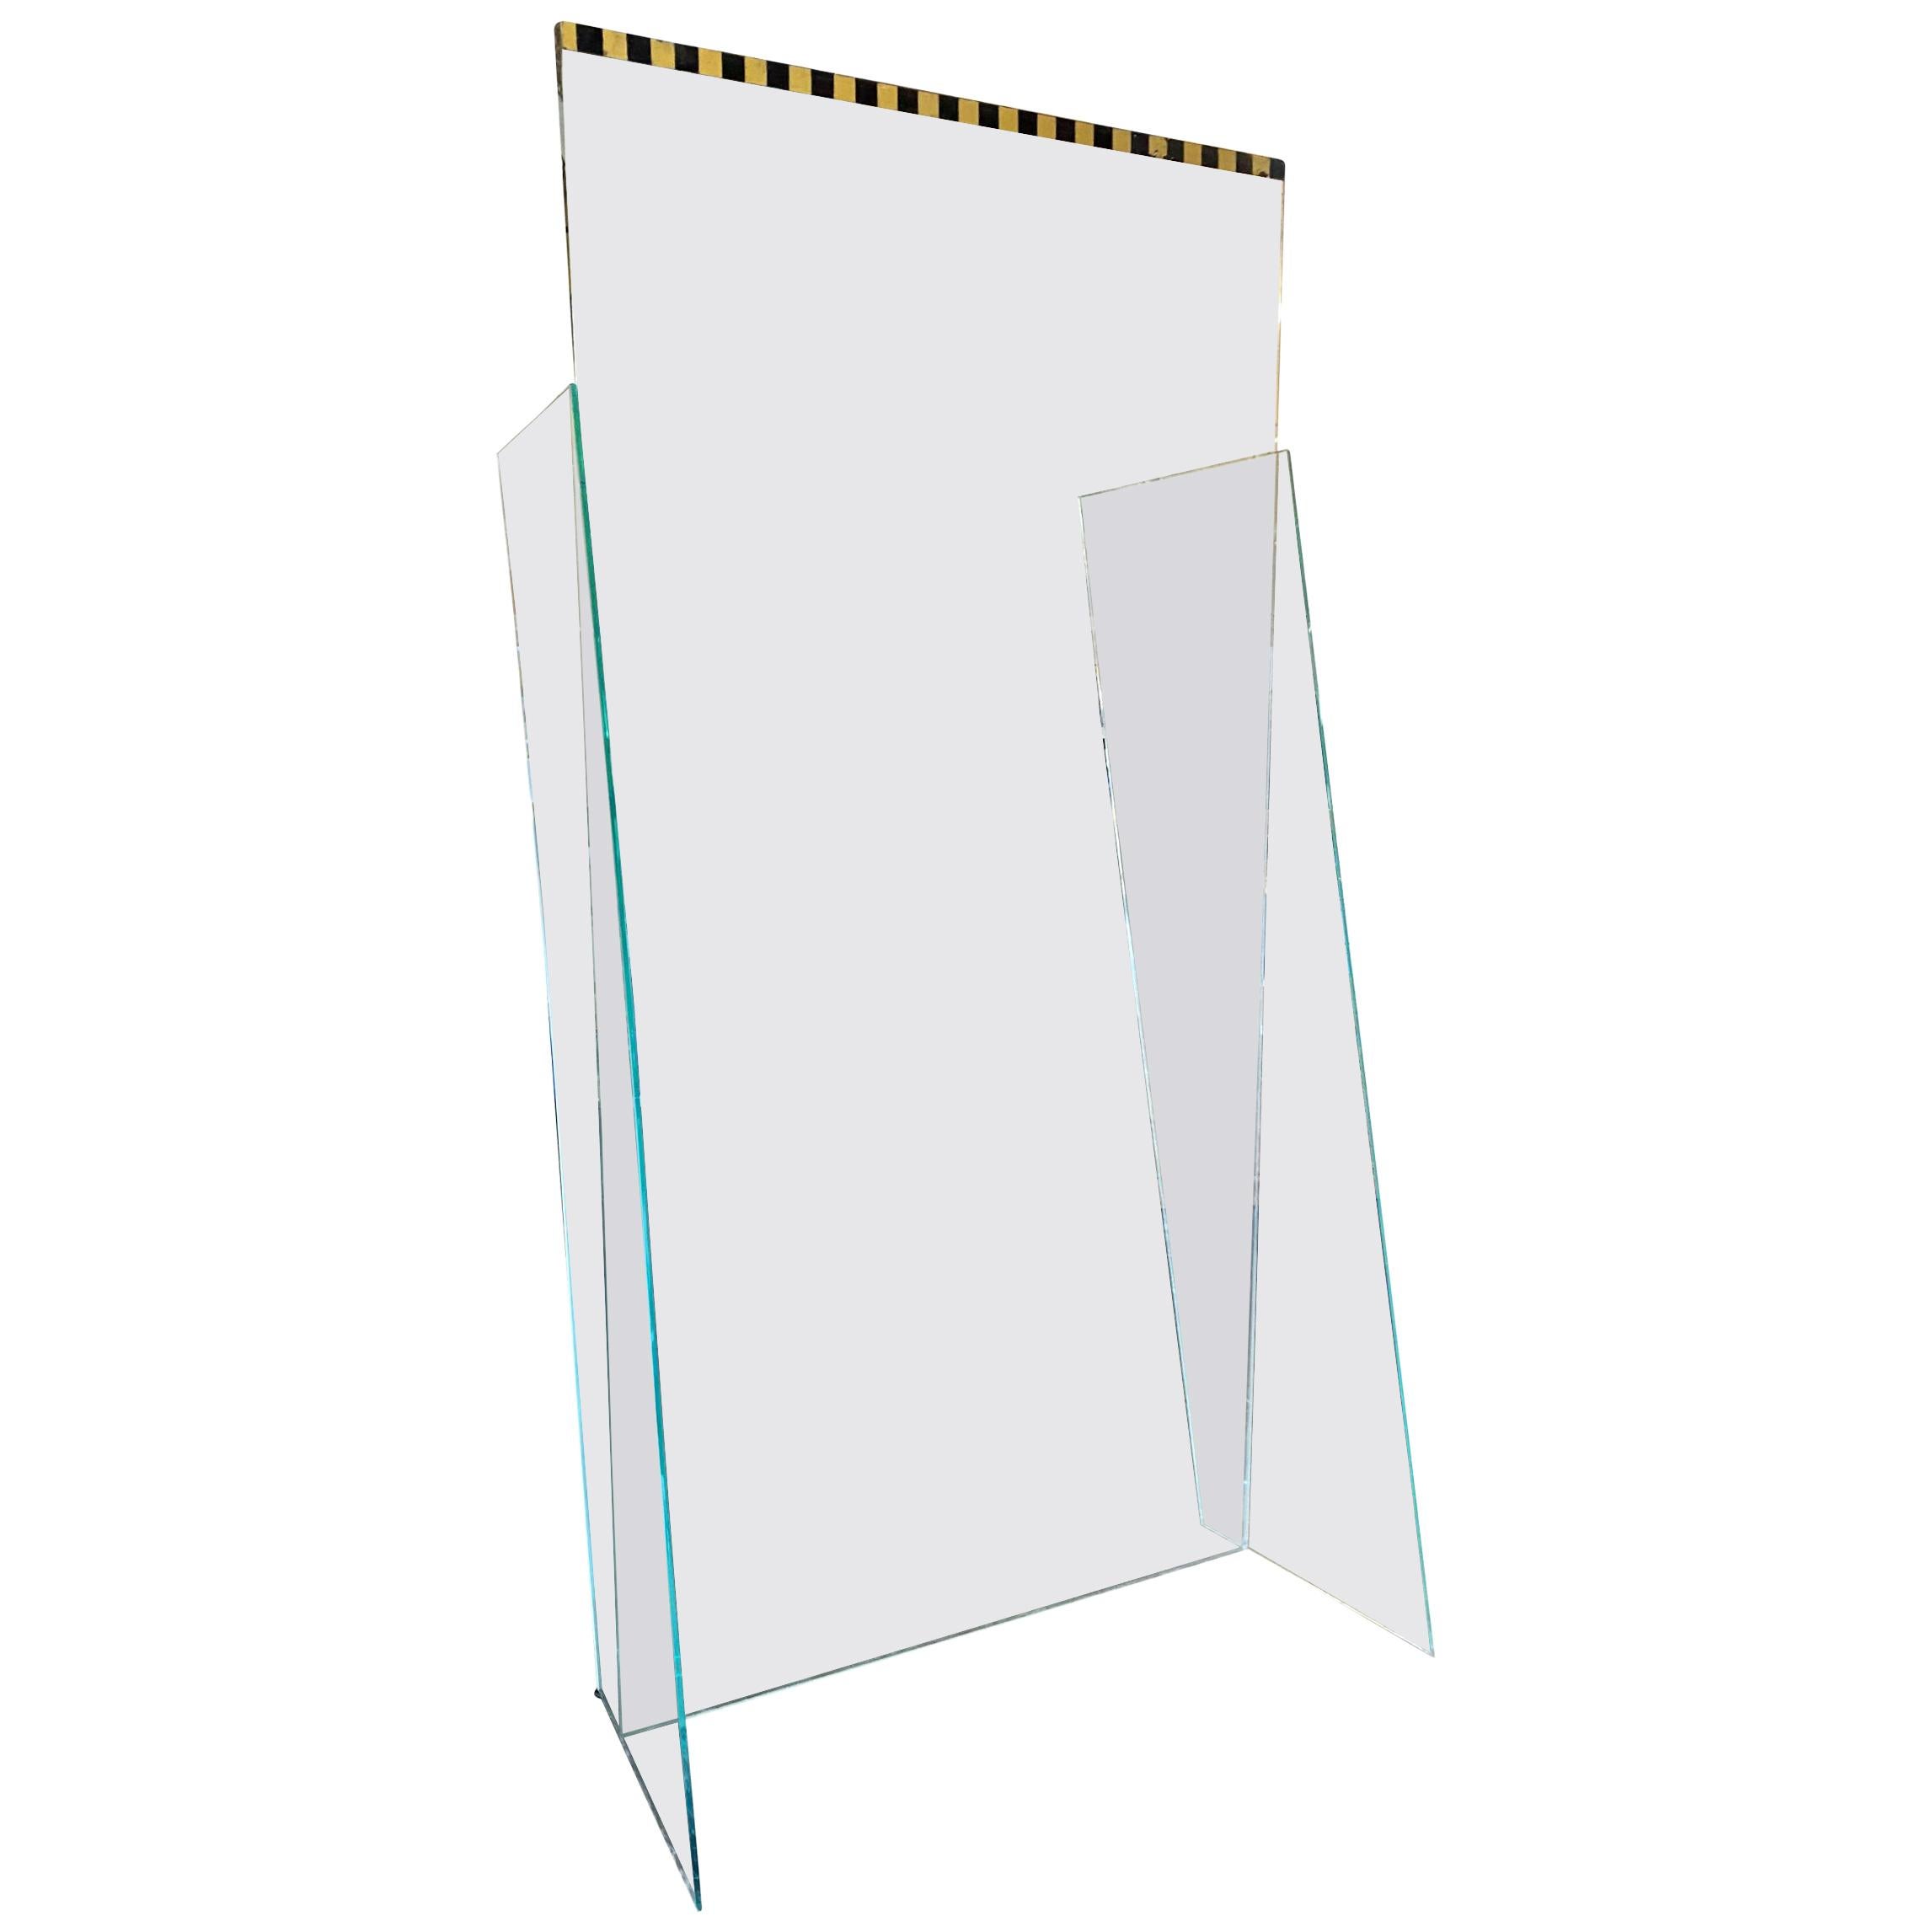 Large Post Modern Plexiglasss Wall Divider For Sale